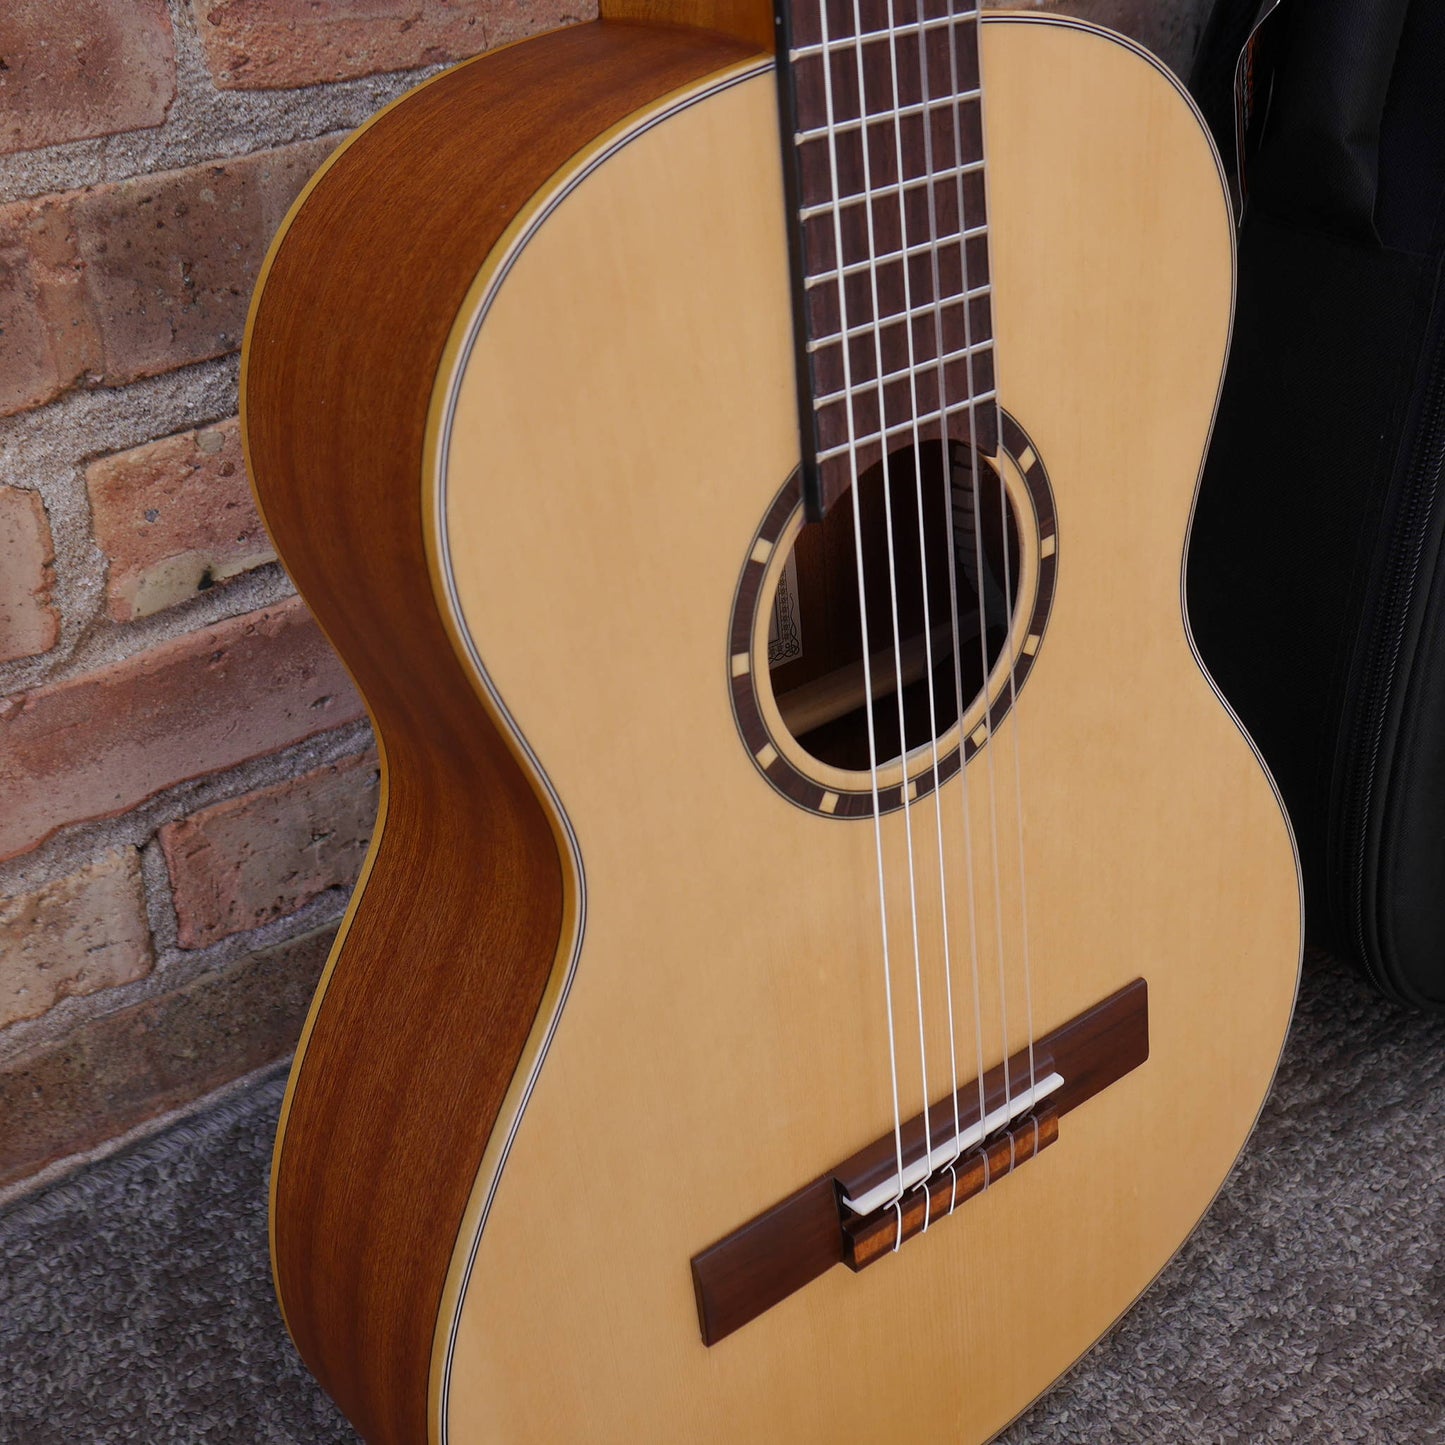 Ortega Family Series ¾ Size Nylon String Guitar